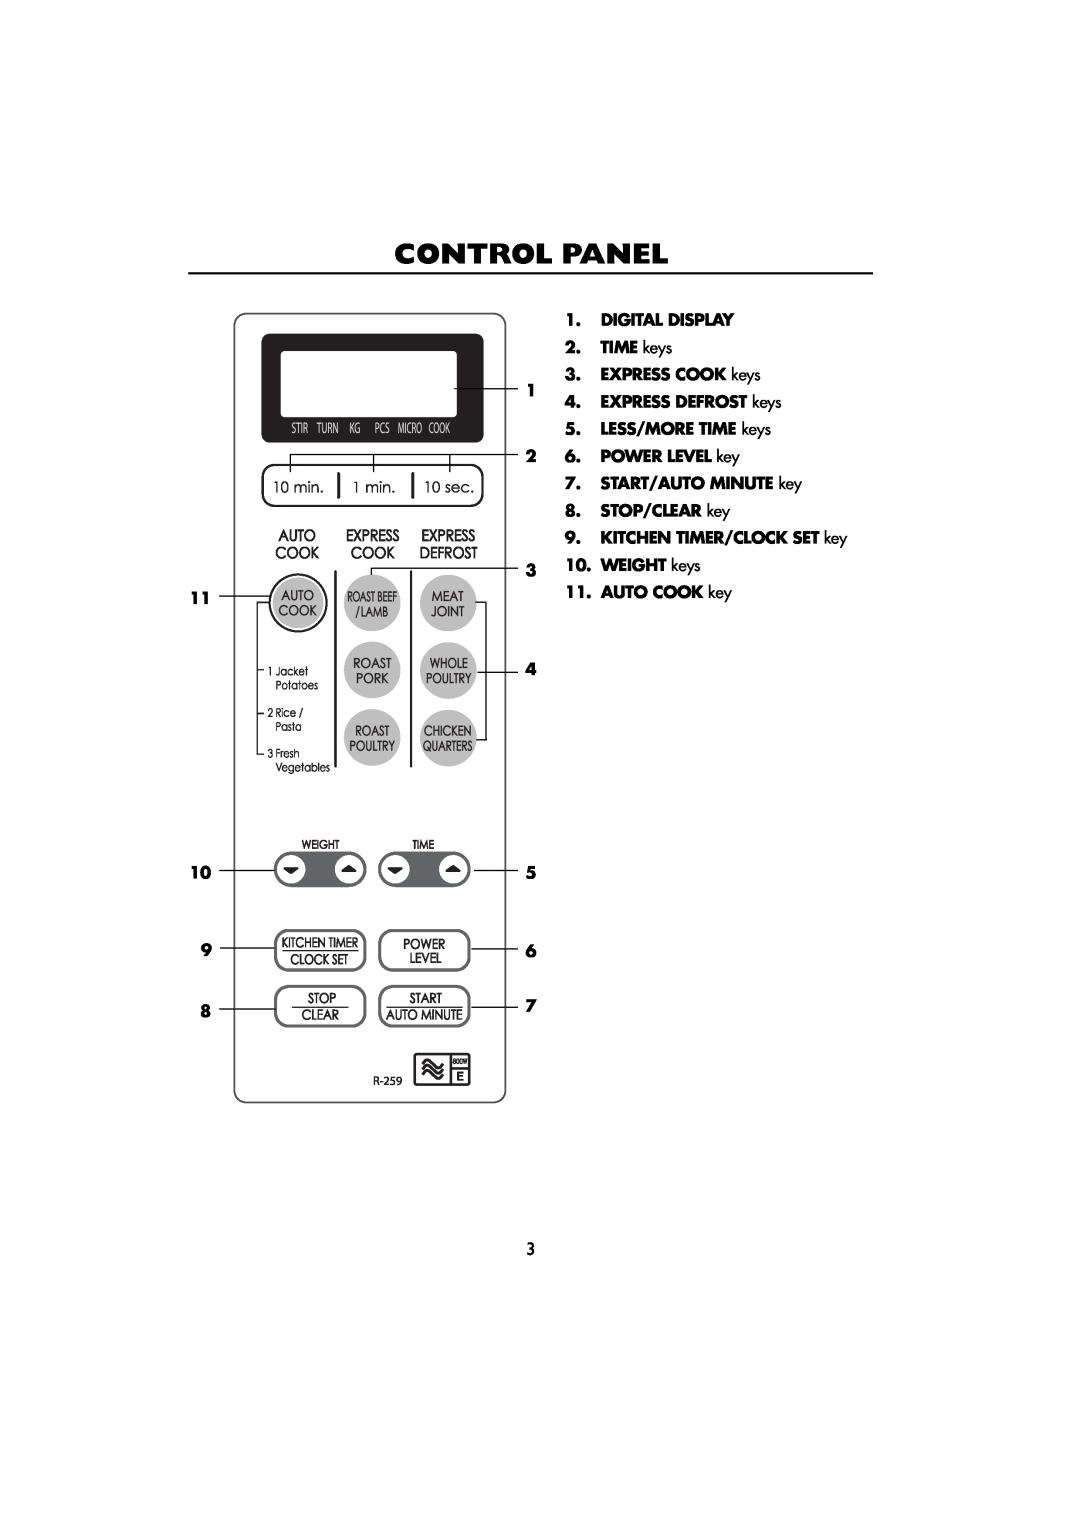 Sharp R-259 Control Panel, Digital Display, EXPRESS COOK keys, EXPRESS DEFROST keys, LESS/MORE TIME keys, WEIGHT keys 